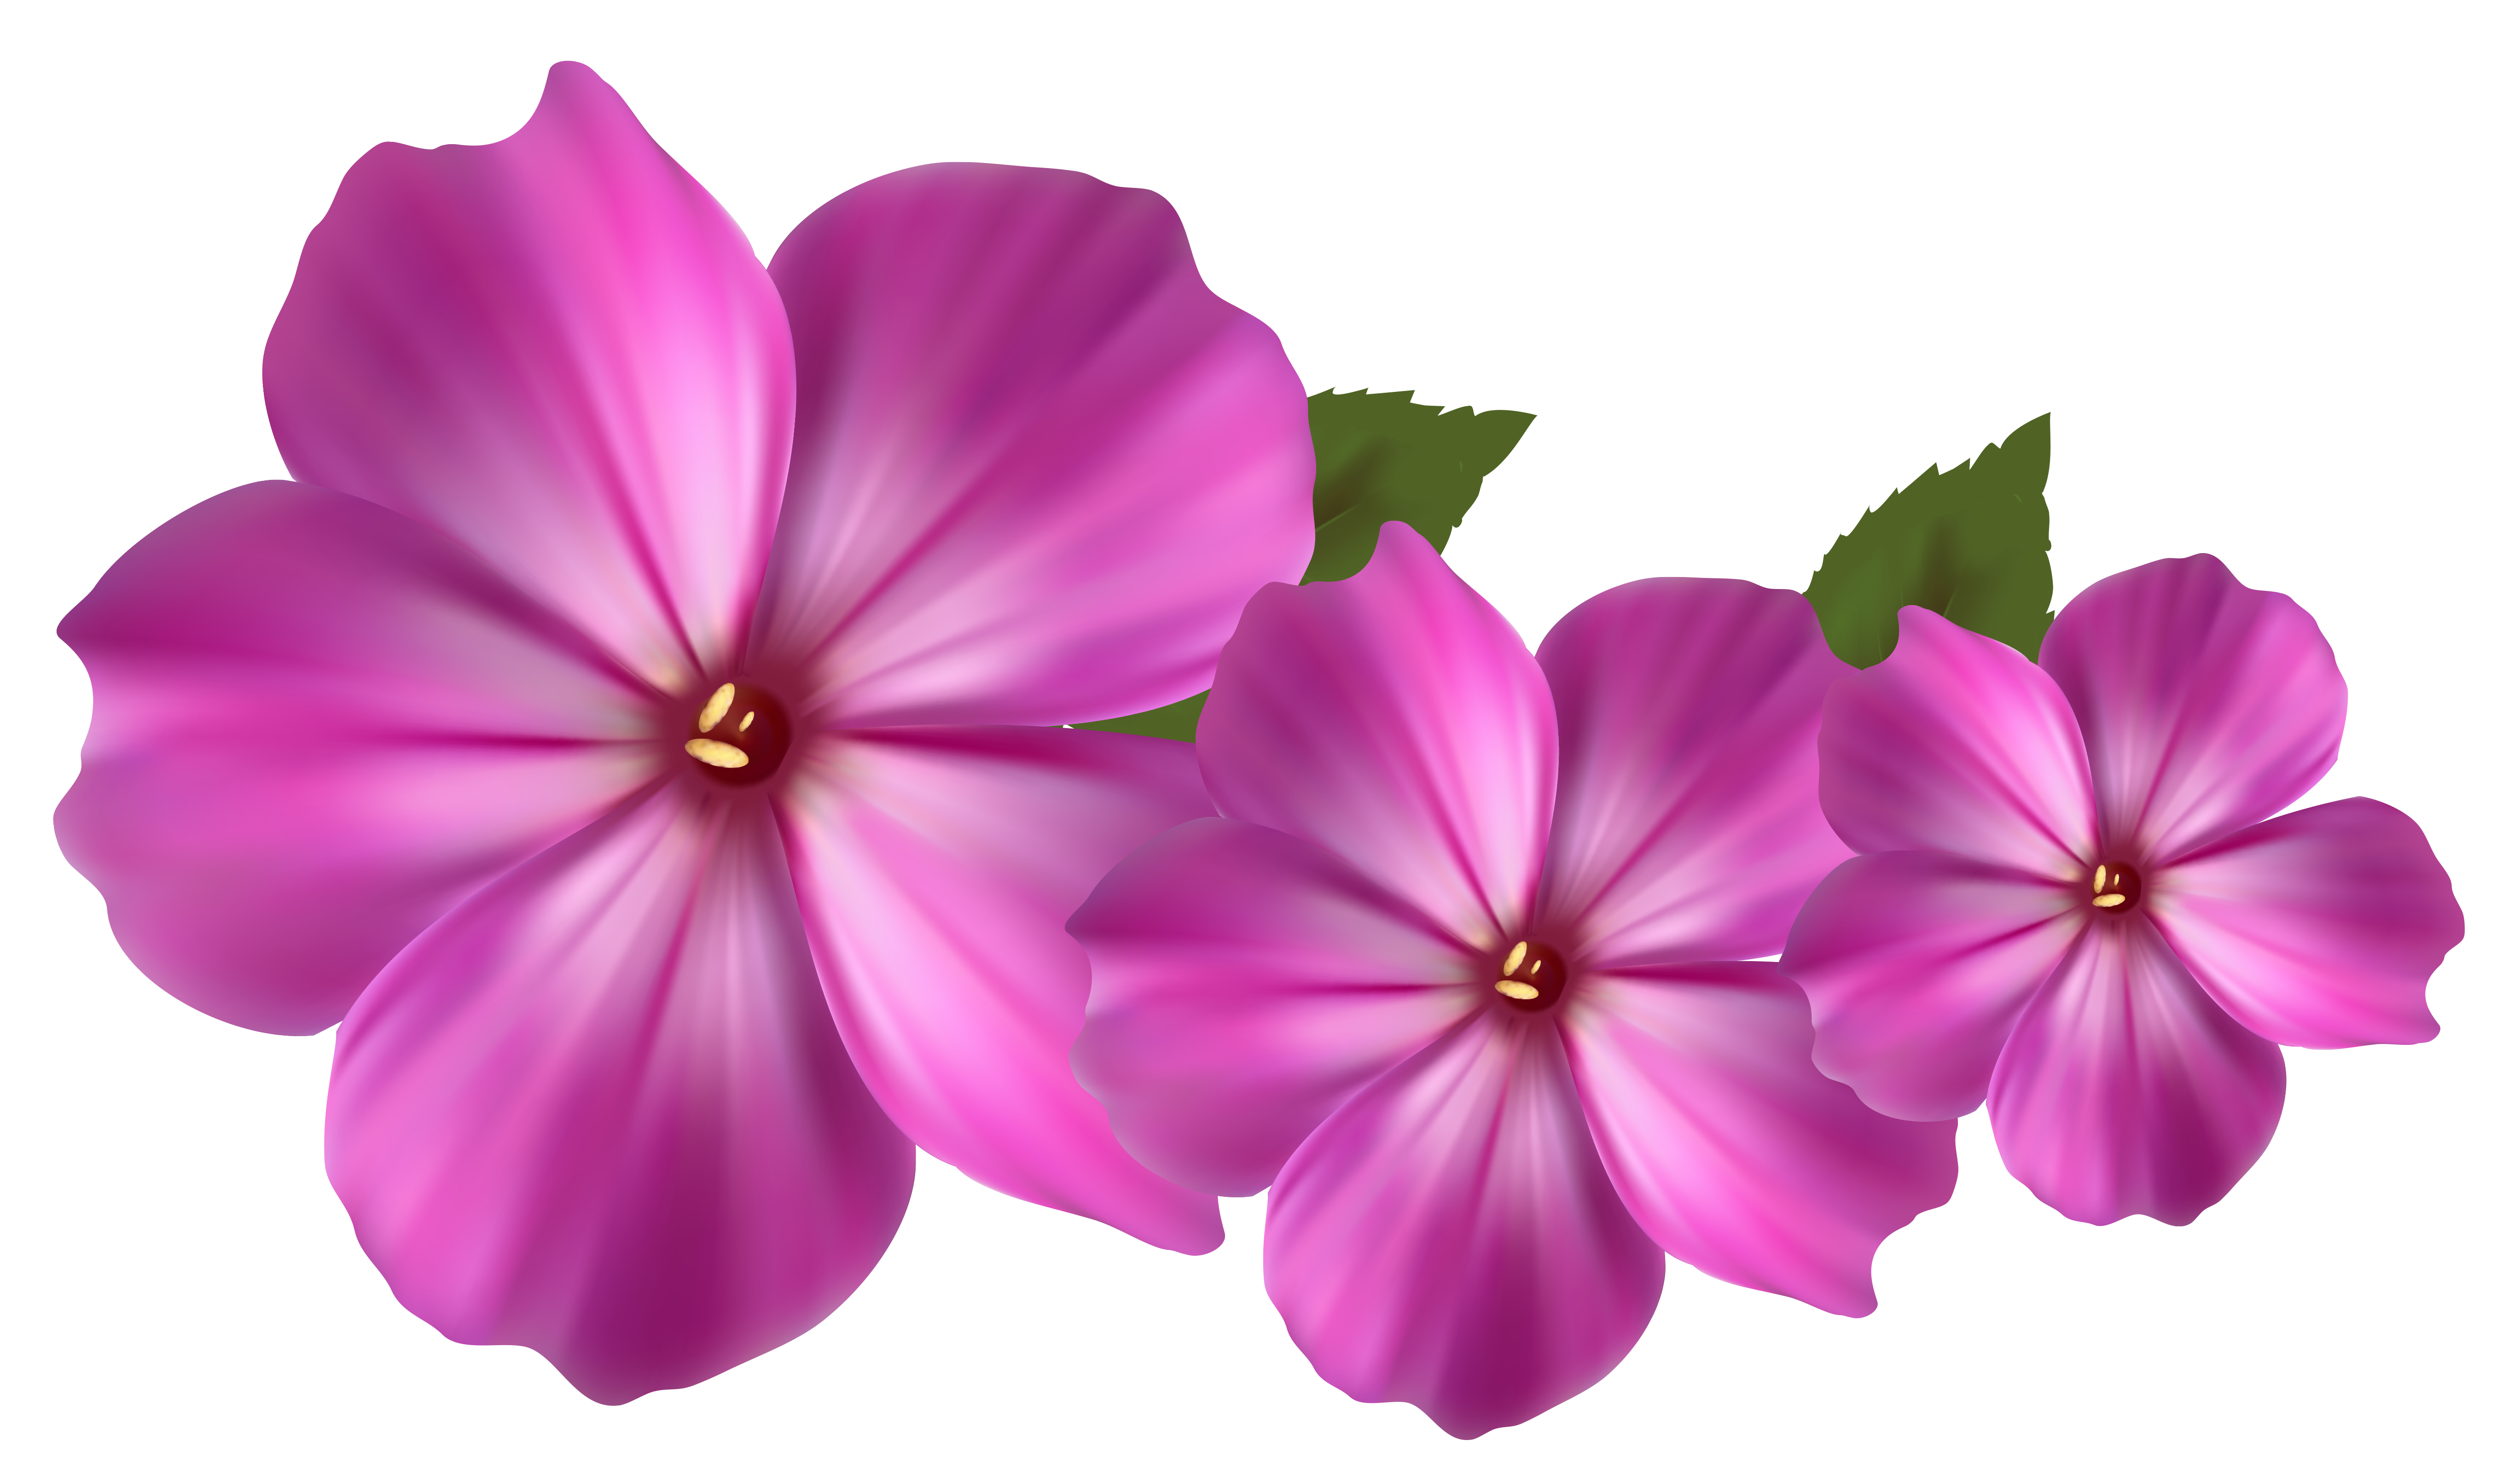 Free Pink Flower Images, Download Free Pink Flower Images png images